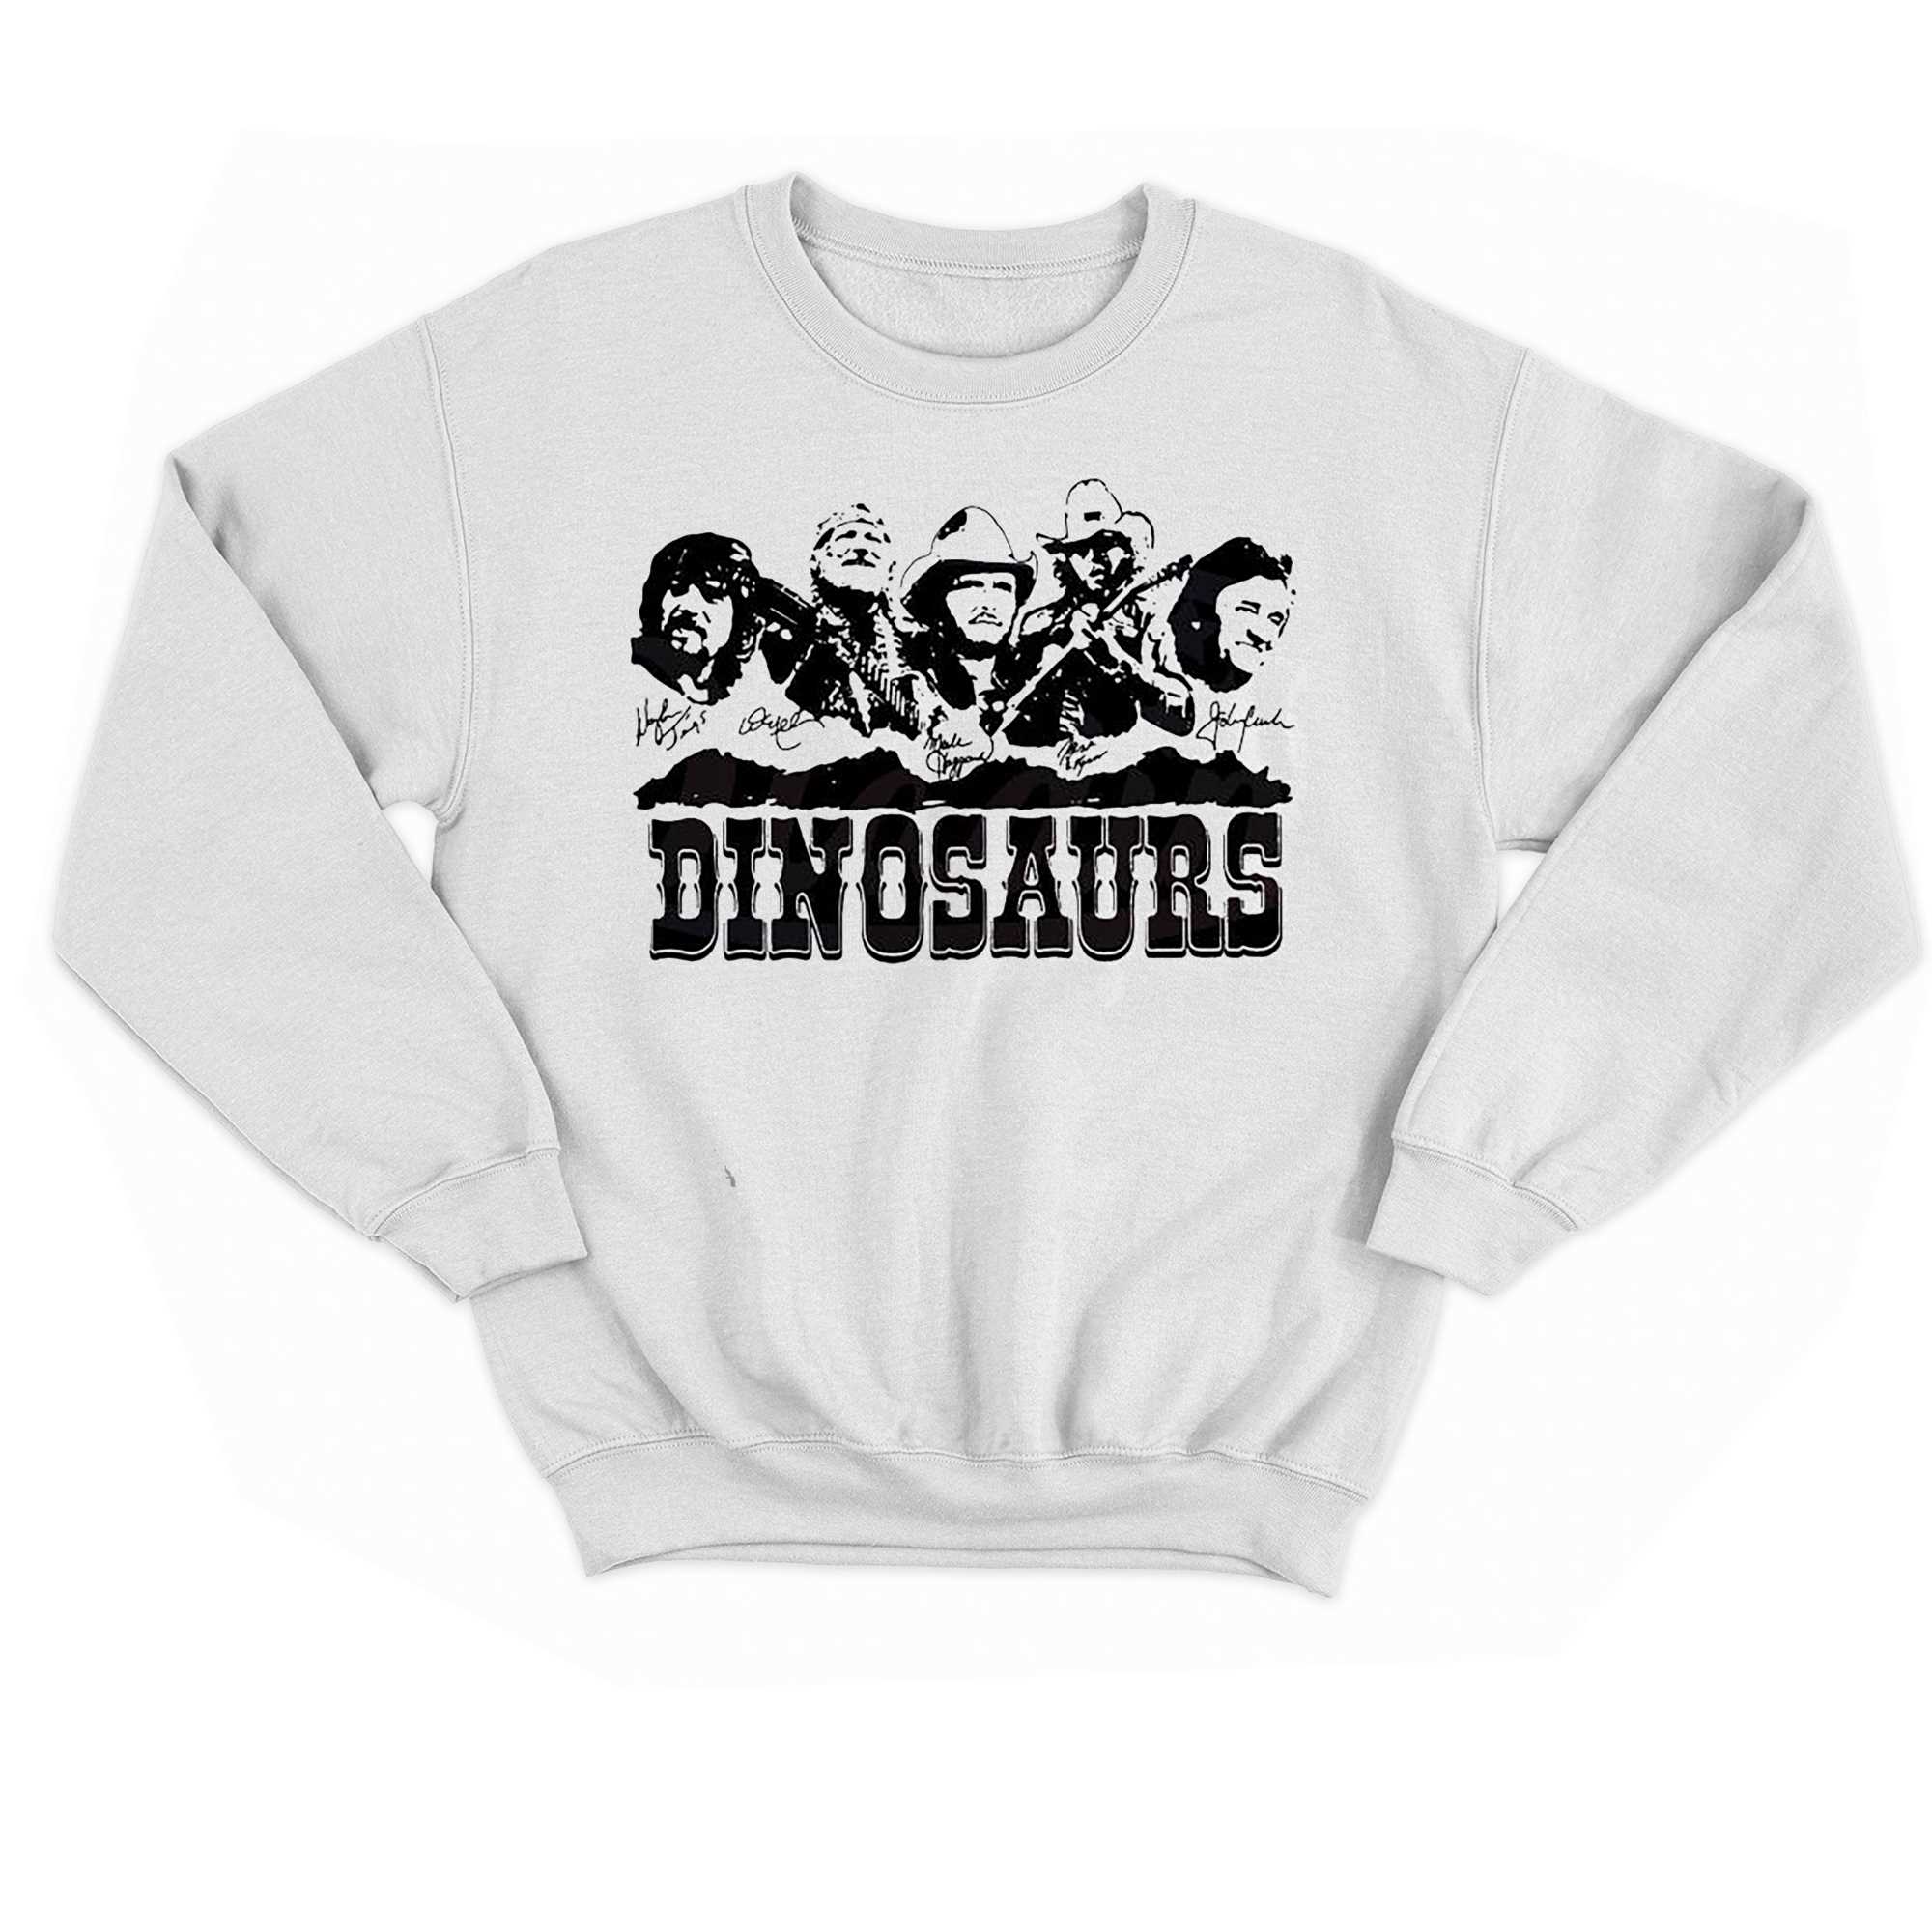 Country Music Legends Dinosaurs Shirt 